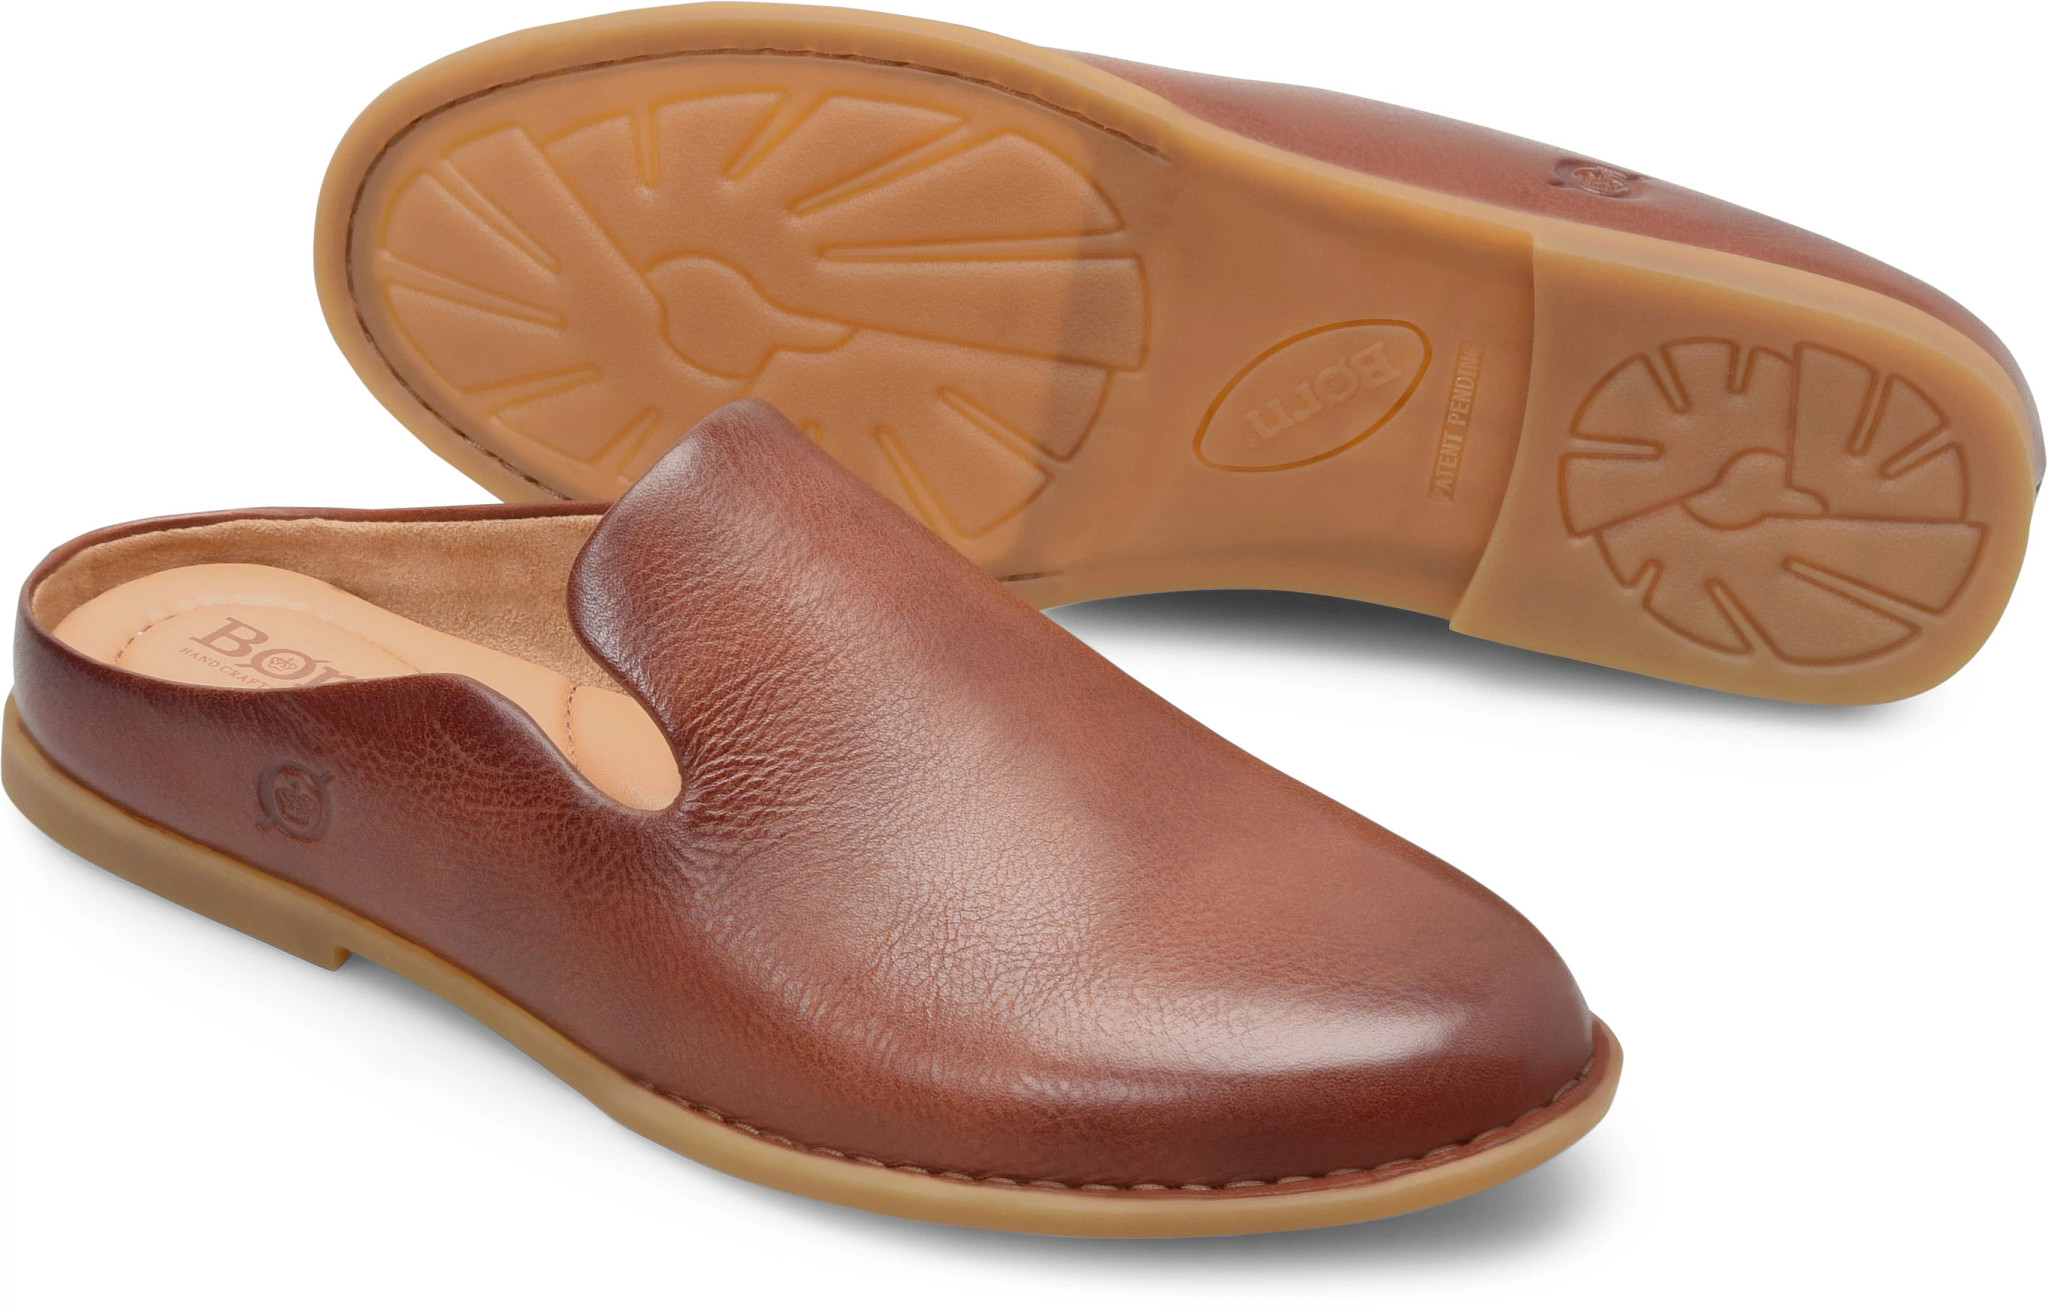 Schoenen damesschoenen Instappers Loafers Born ladies leather flats size 8.5 